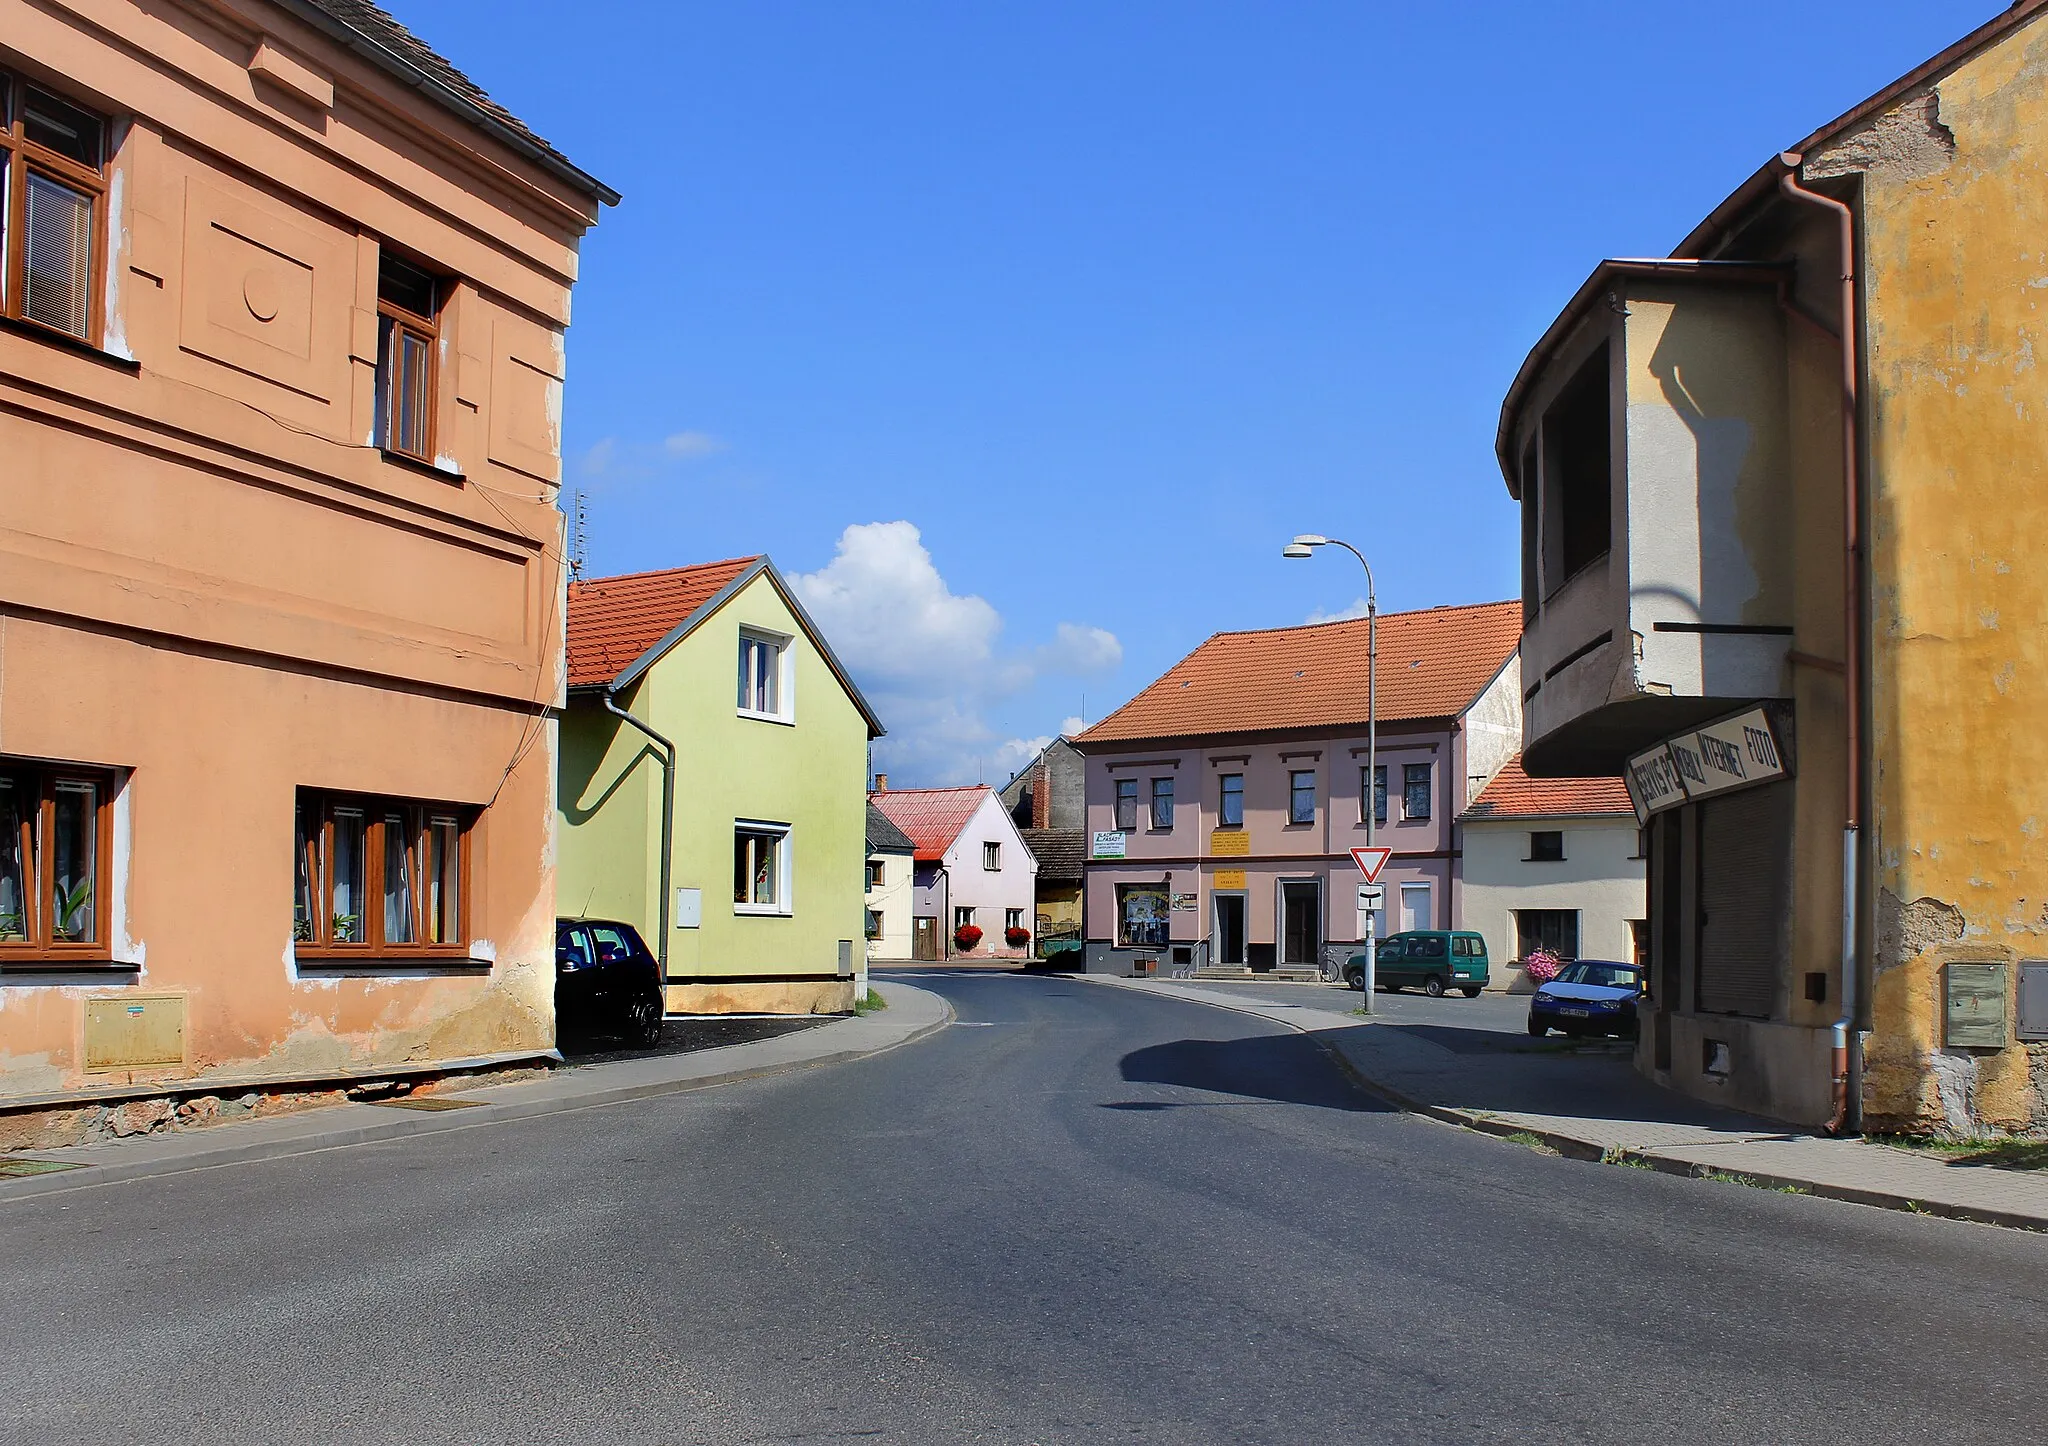 Photo showing: 28. října street in Staňkov, Czech Republic.